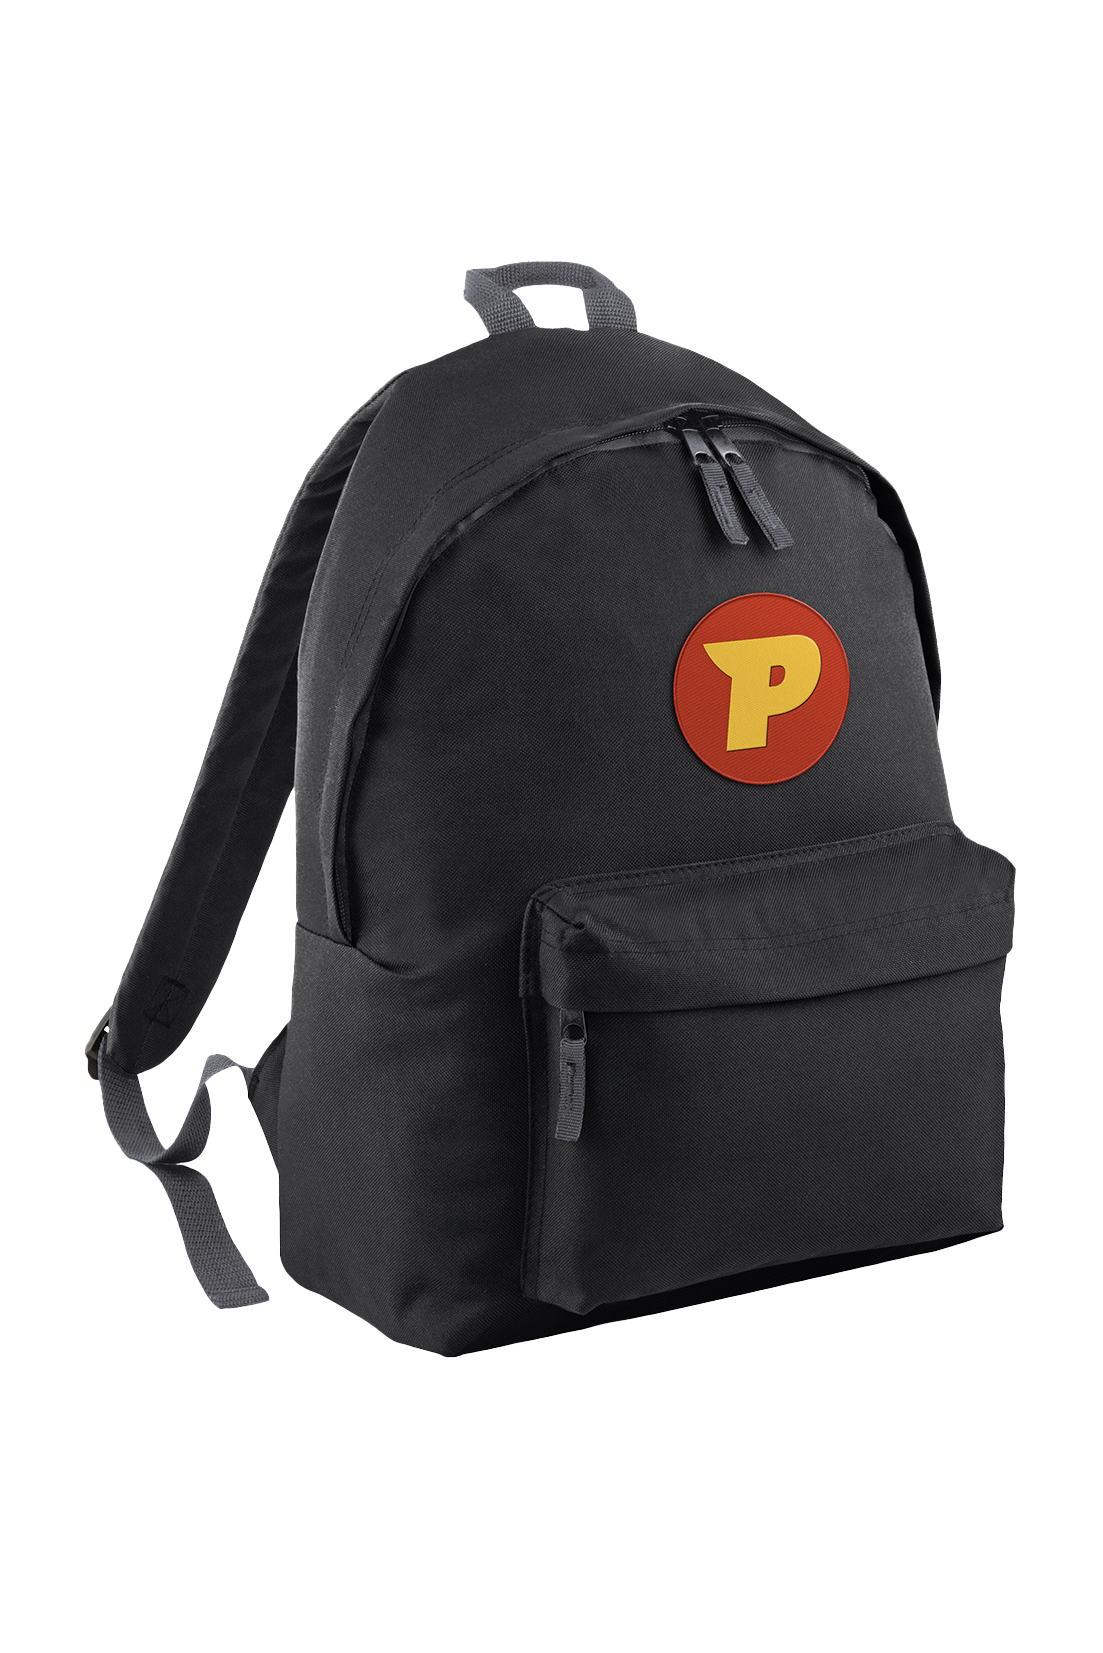 Phoenix 'P' kids backpack